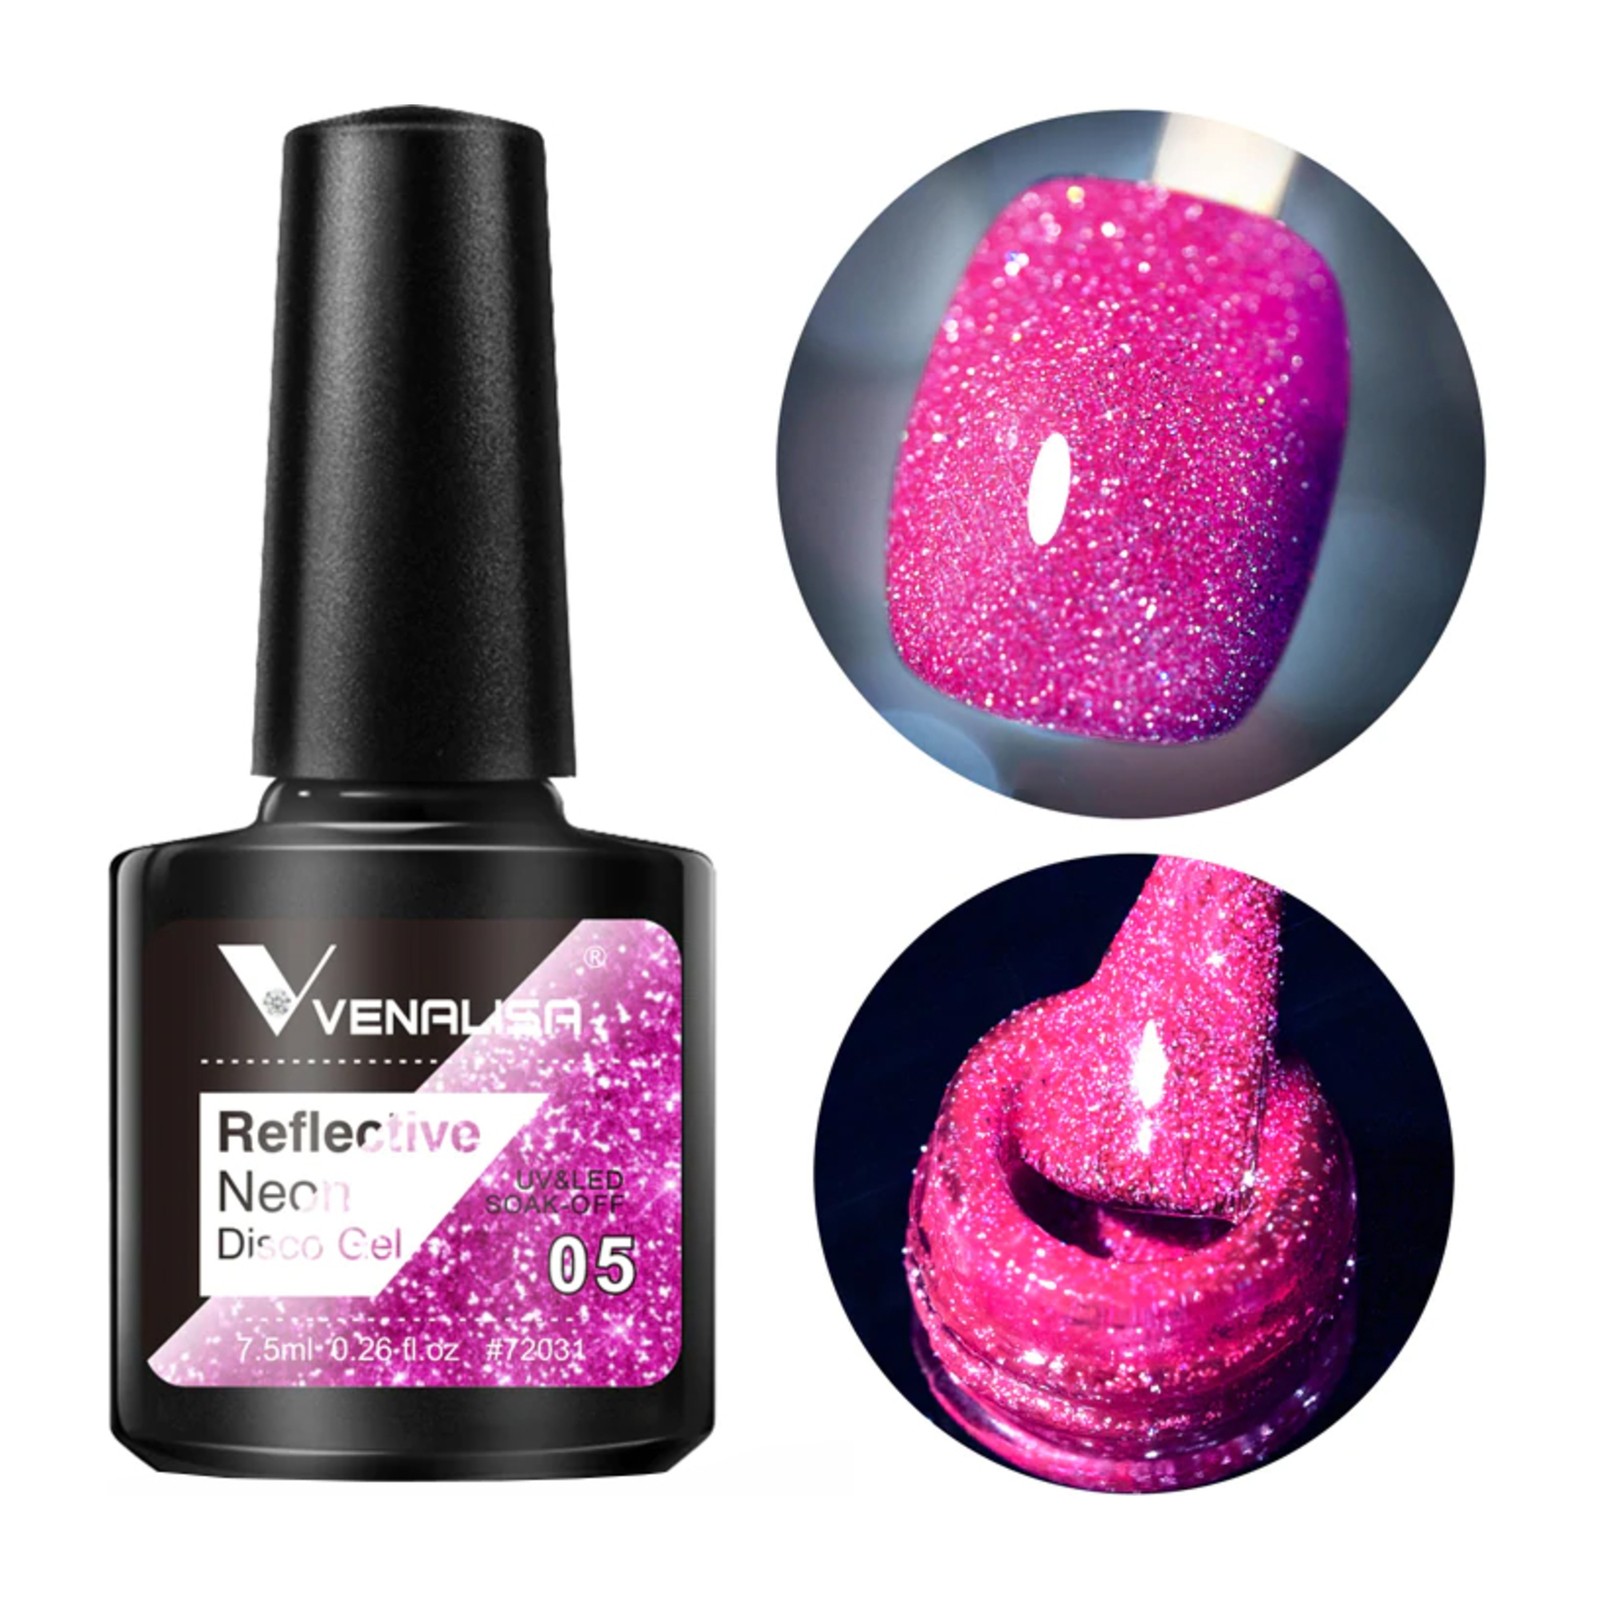 Venalisa -  Reflecterende Neon Disco Gel -  BD05